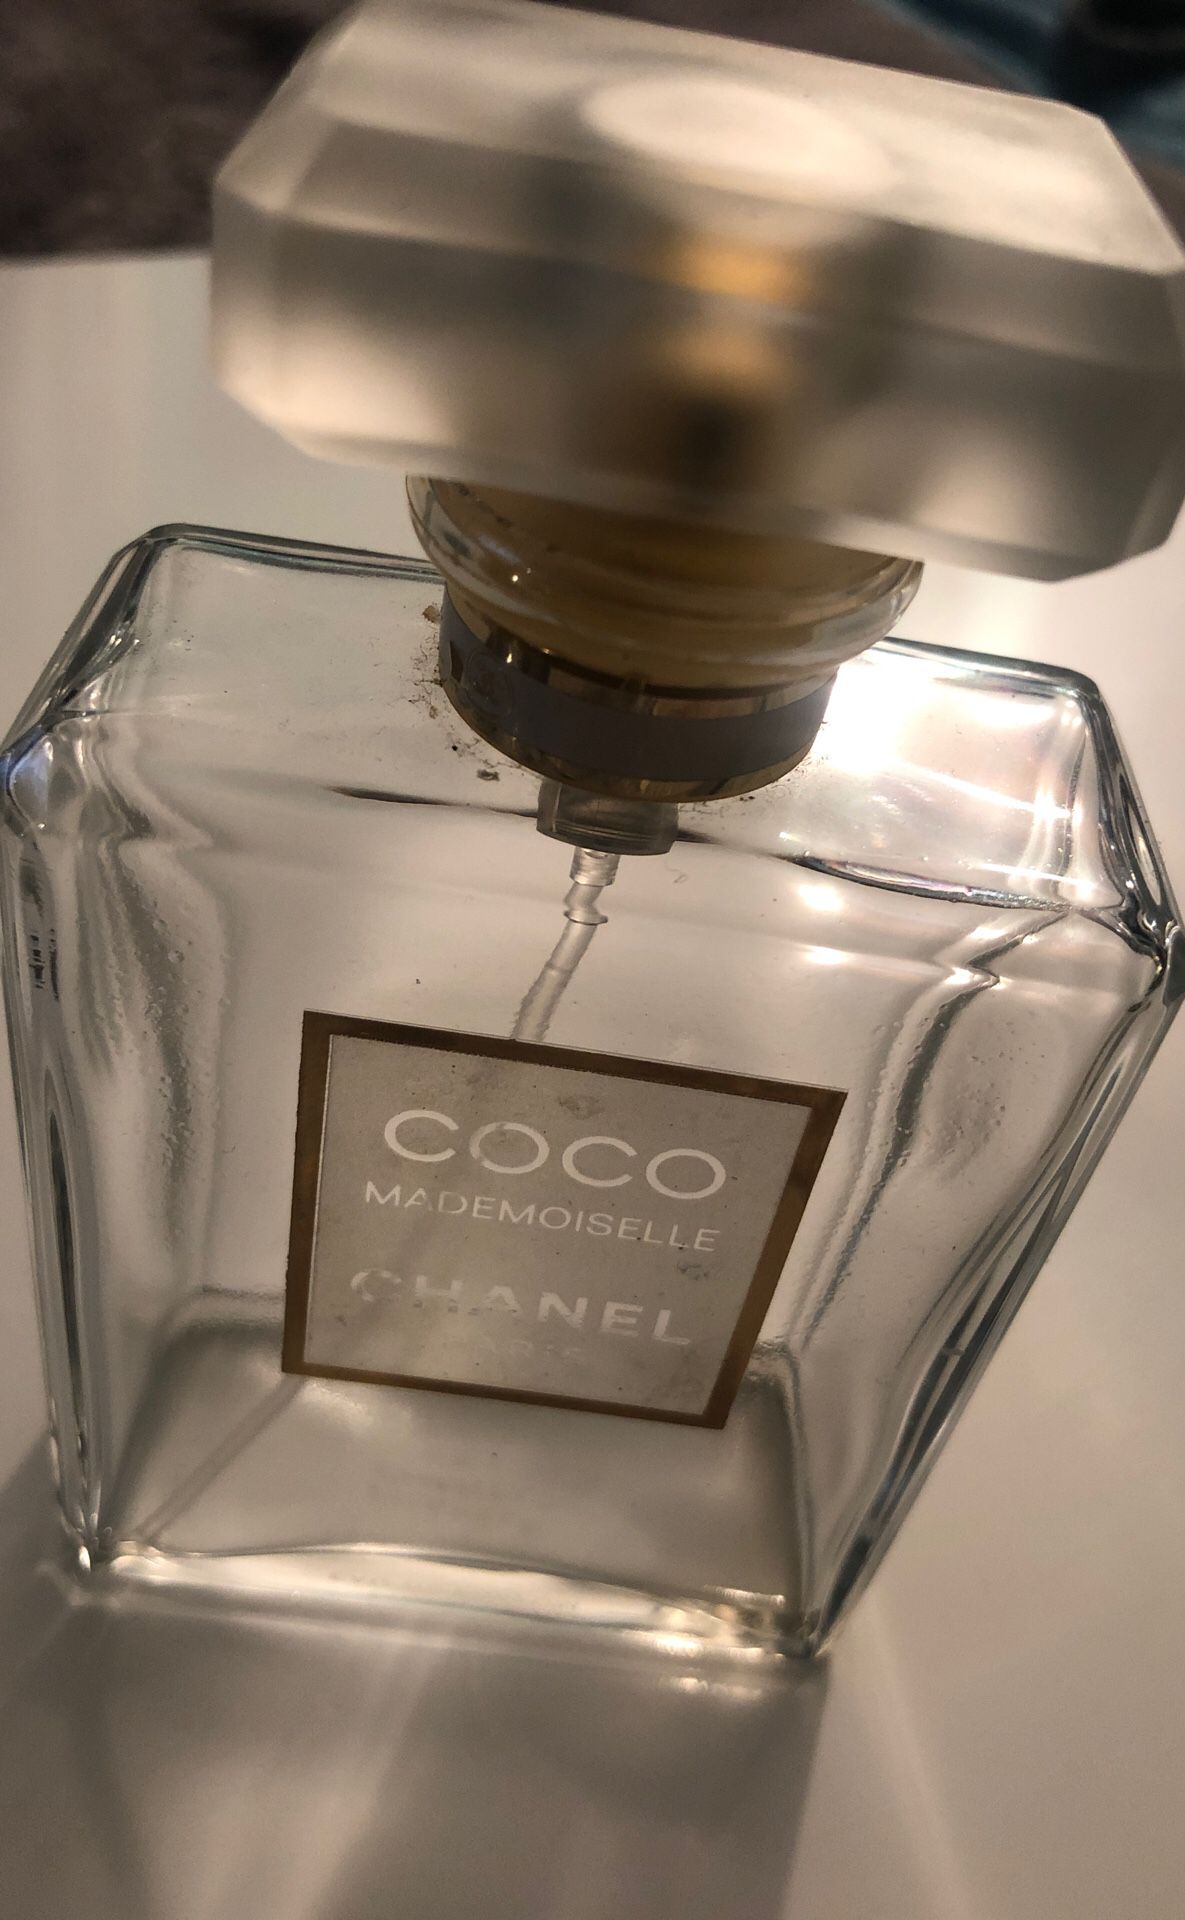 Chanel Coco mademoiselle empty perfume bottle 3.4 ounces